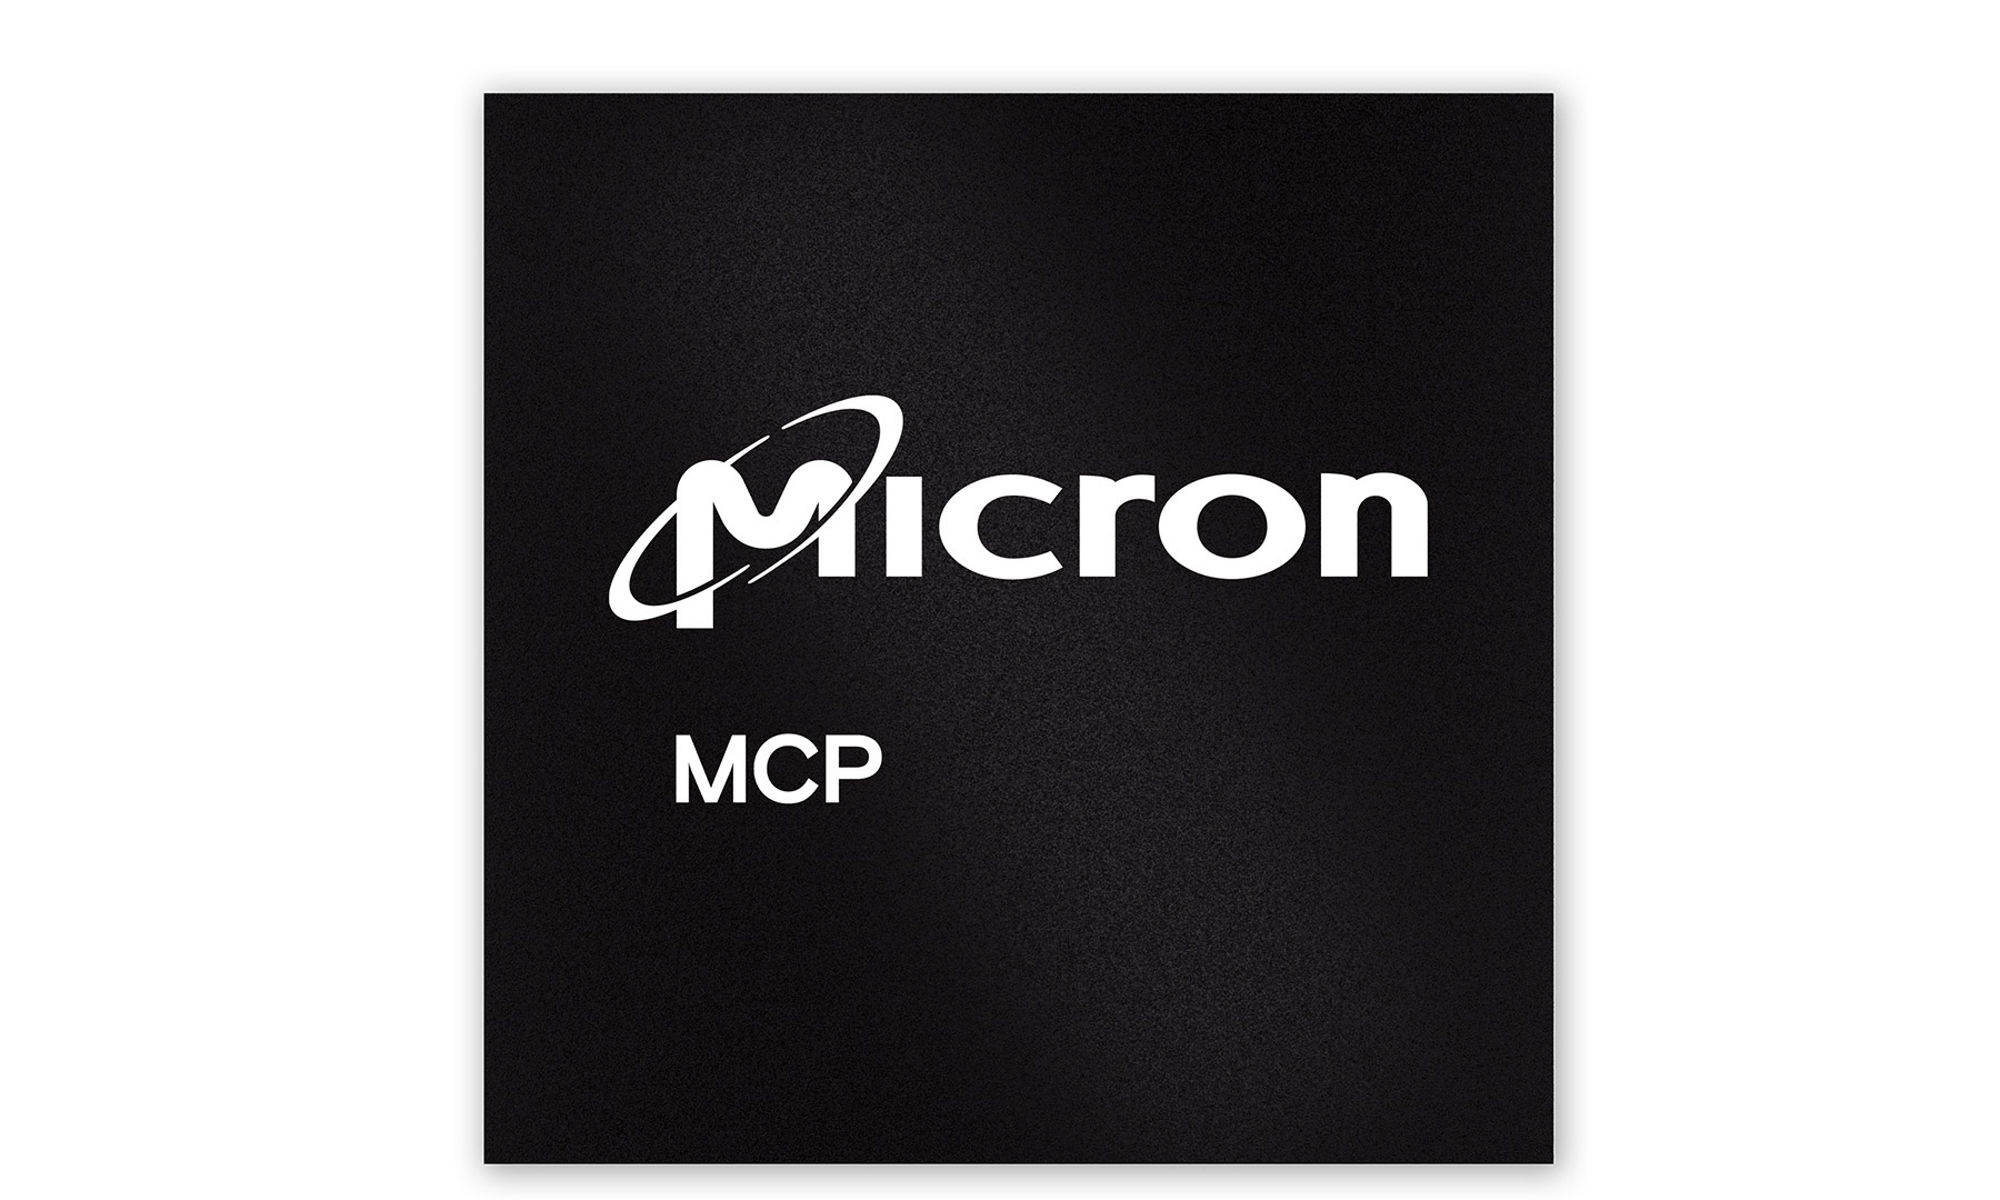 Micron NAND-based MCP